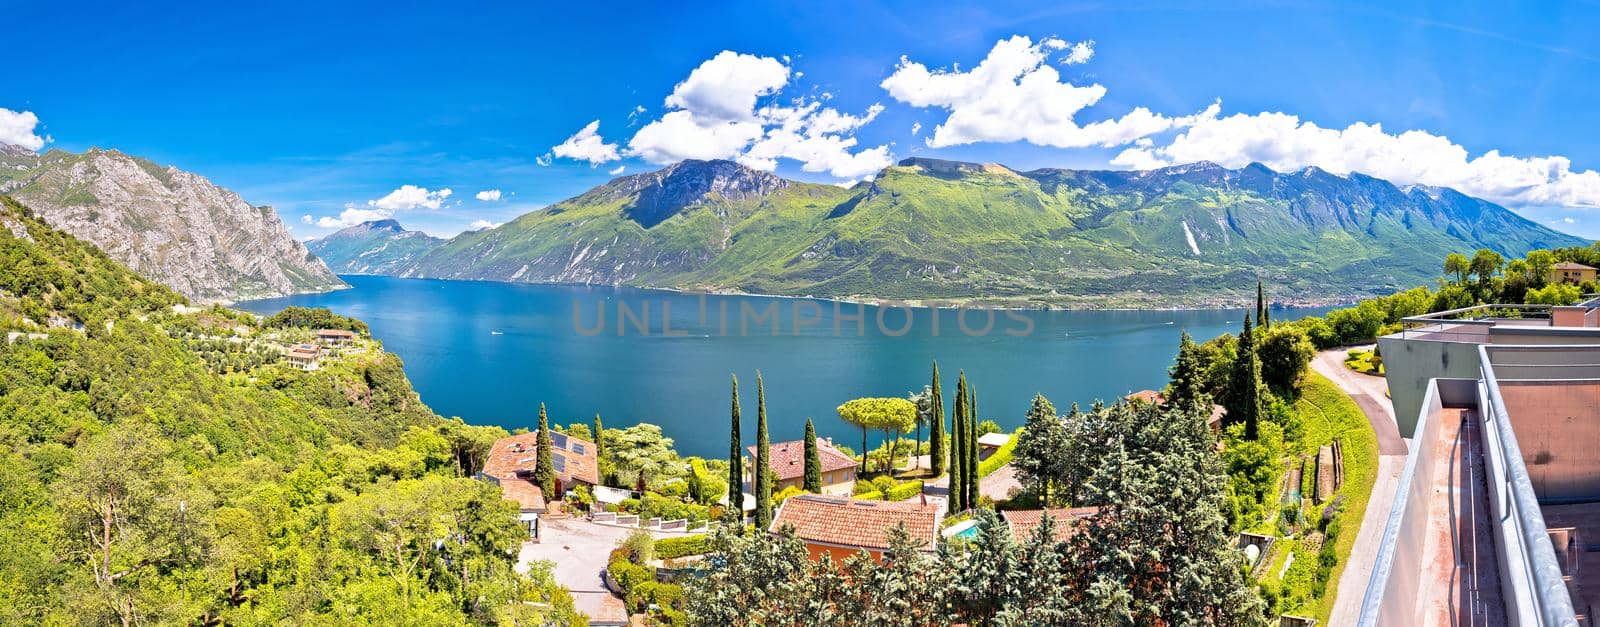 Lago di Garda lake panoramic scenic view, Limone sul Garda by xbrchx